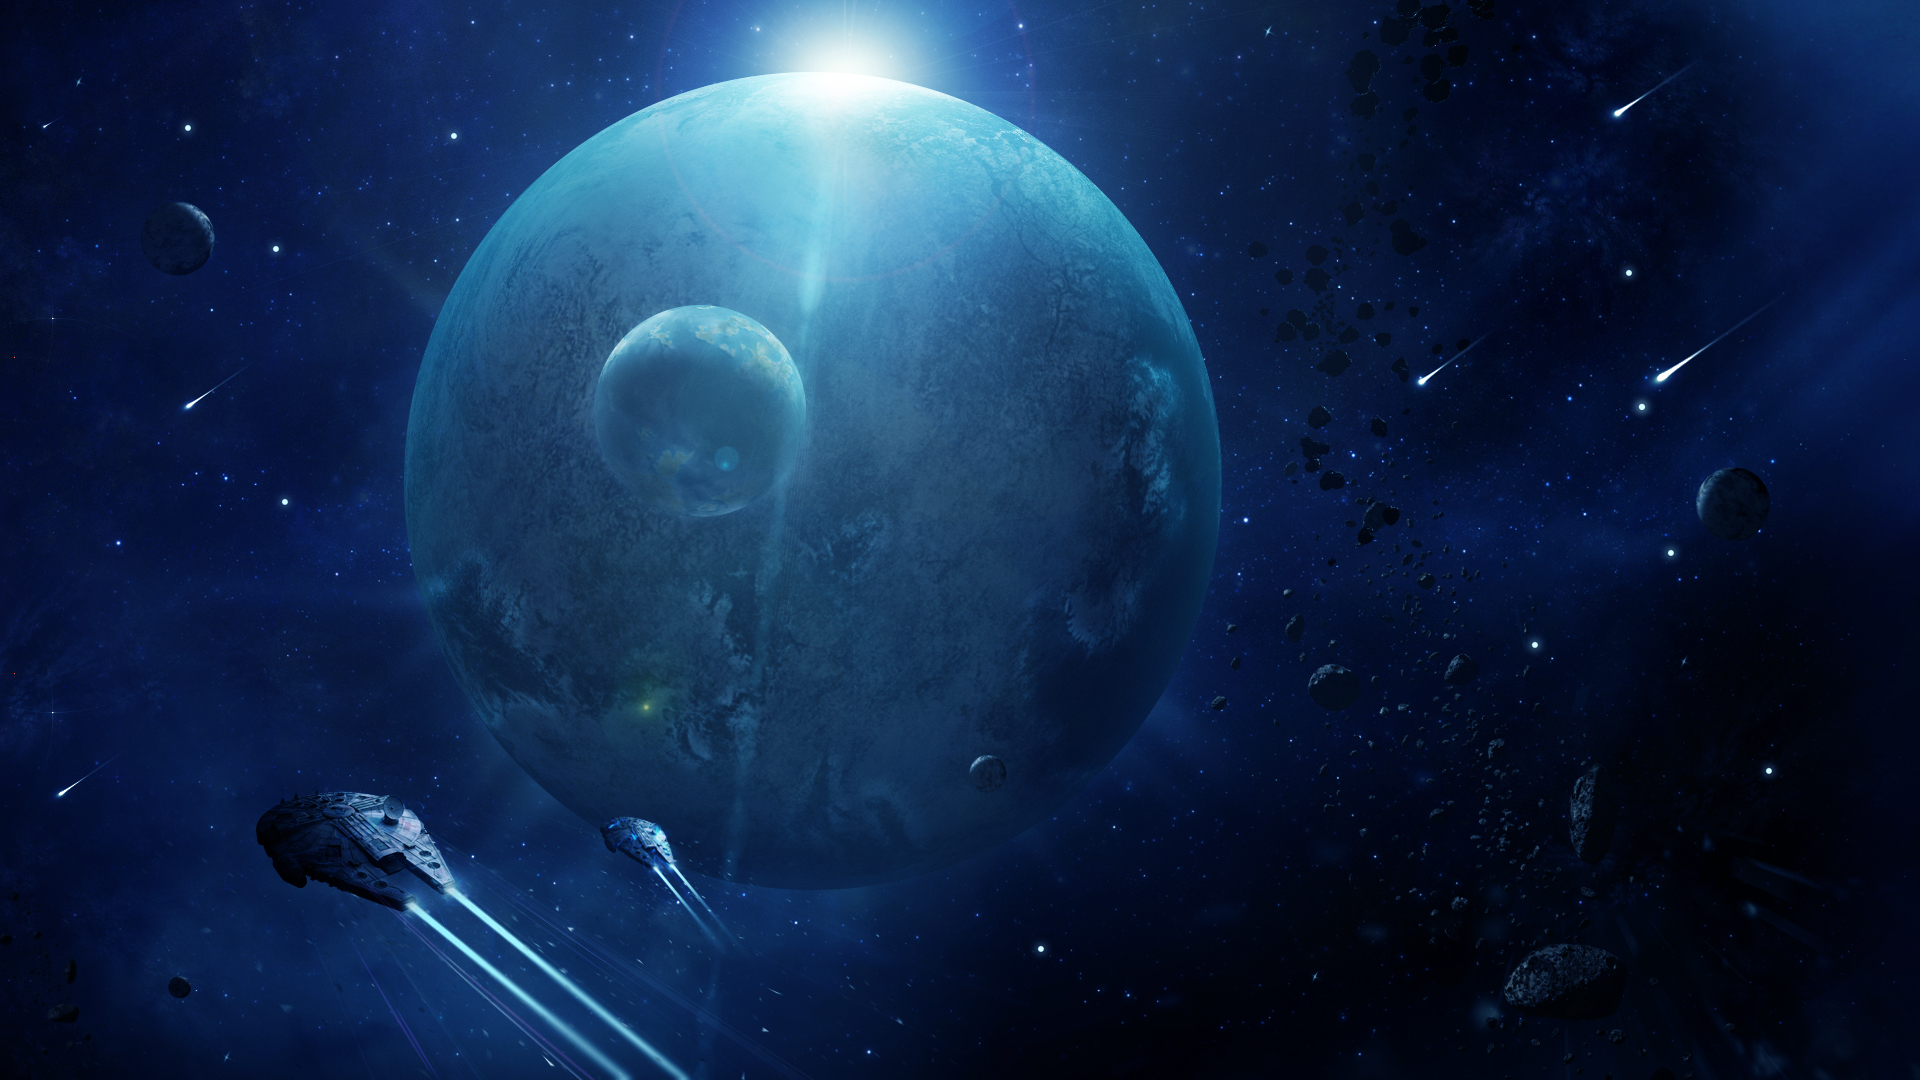 fondo de pantalla de star wars planet,espacio exterior,objeto astronómico,atmósfera,espacio,planeta